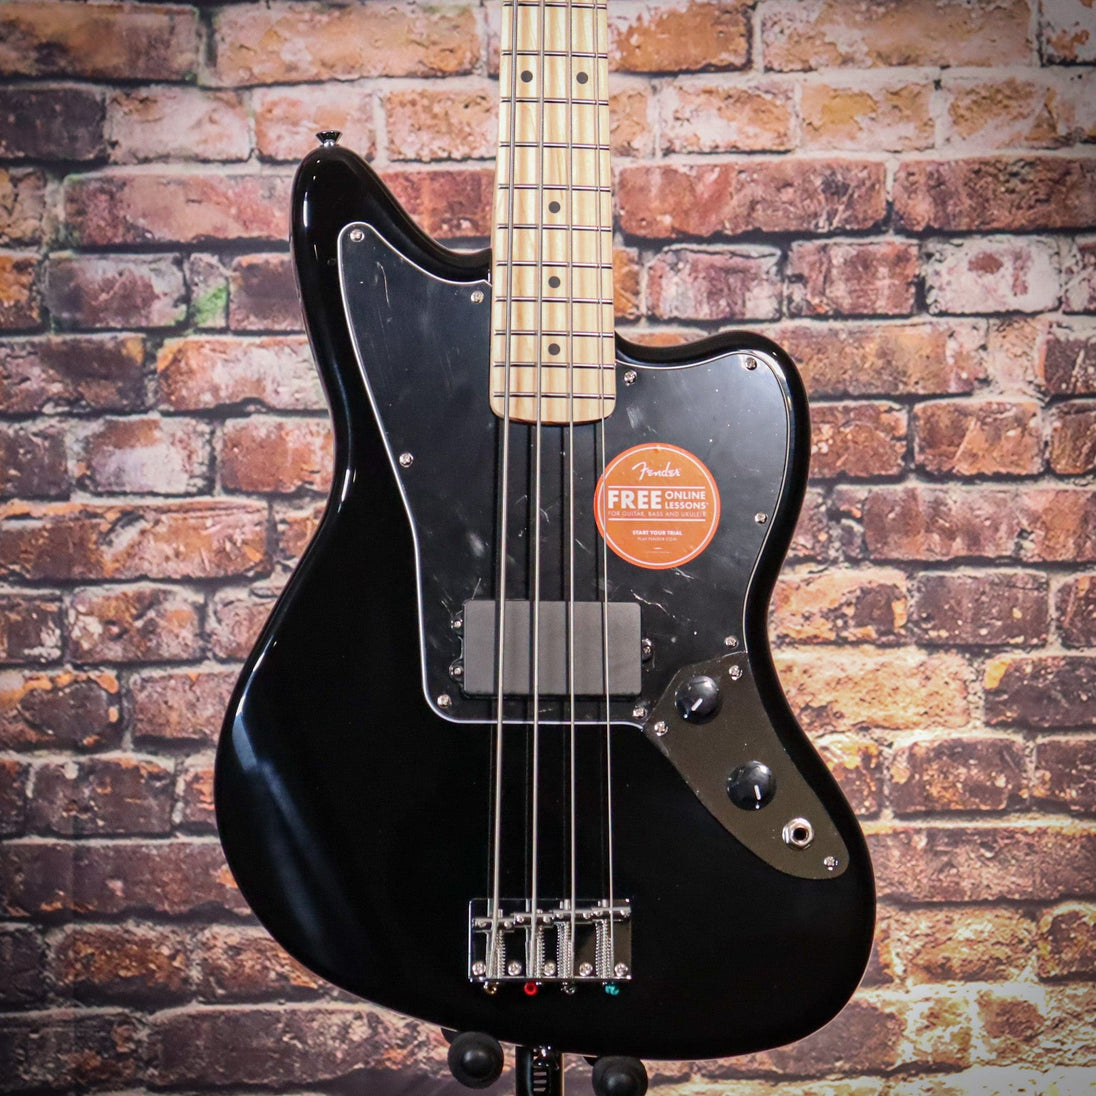 Fender Affinity Series Jaguar Bass H